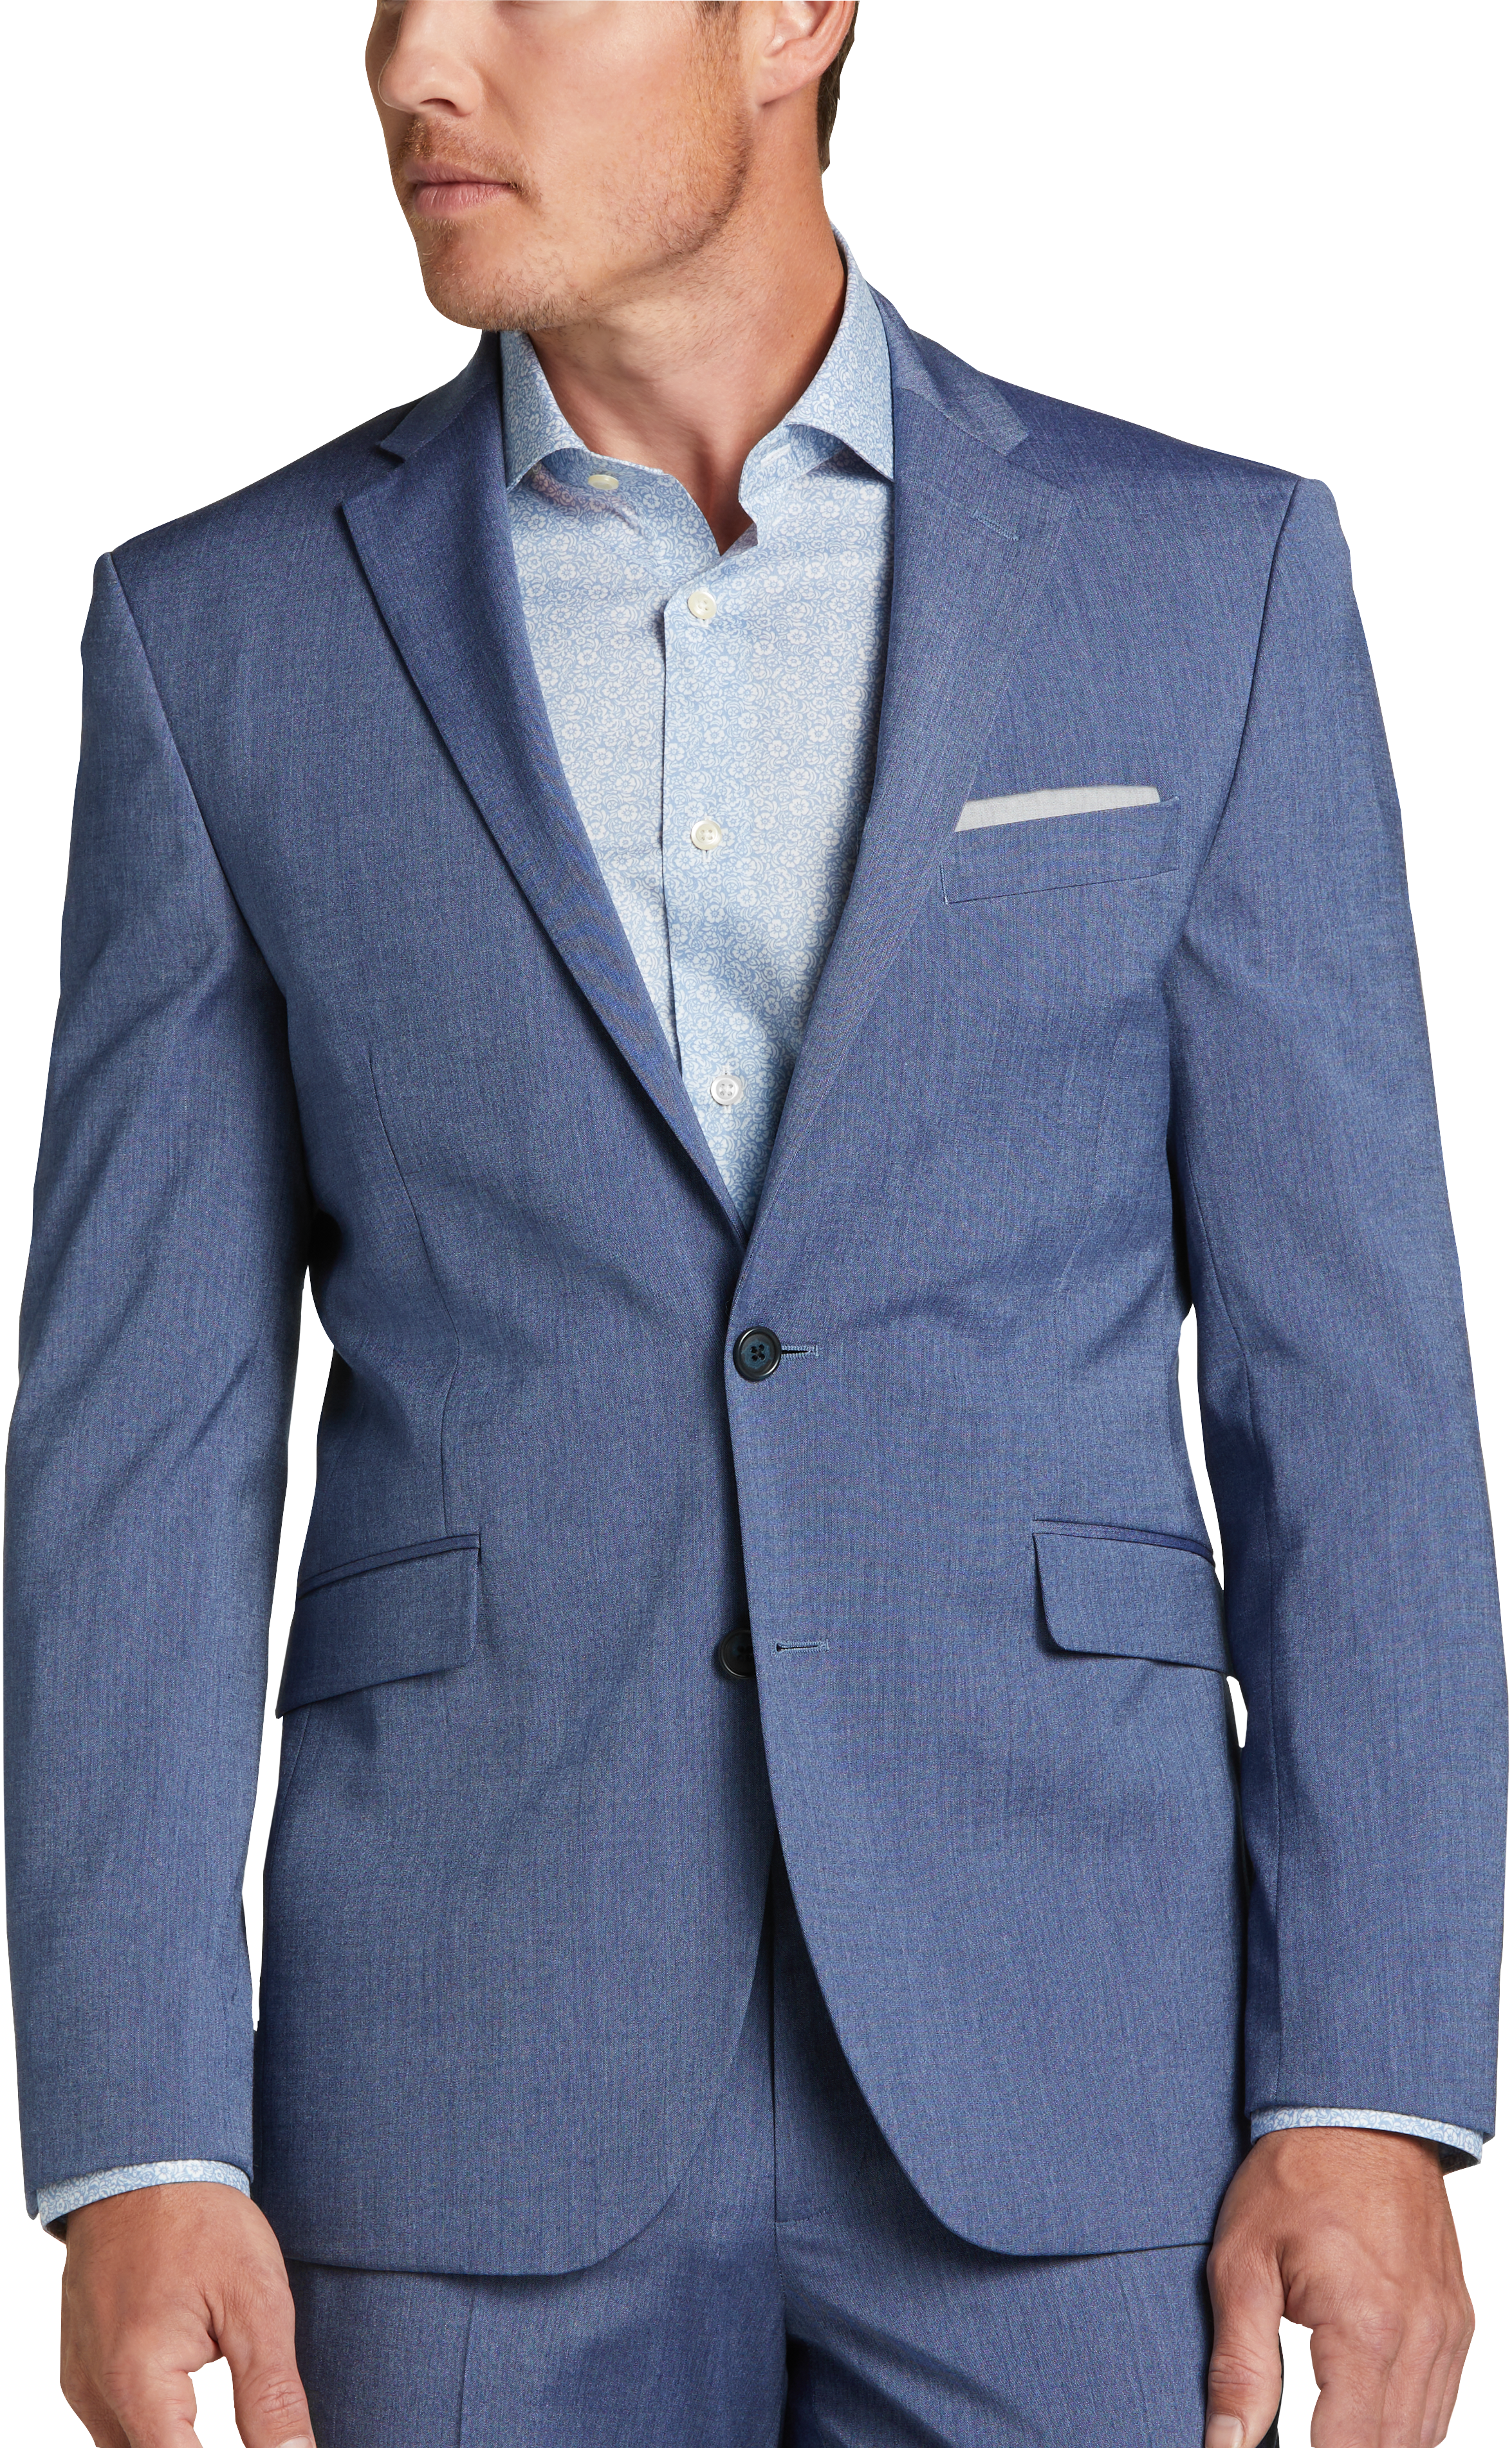 Blue Performance Wedding Suit By Calvin Klein Suit Rental, 53% OFF